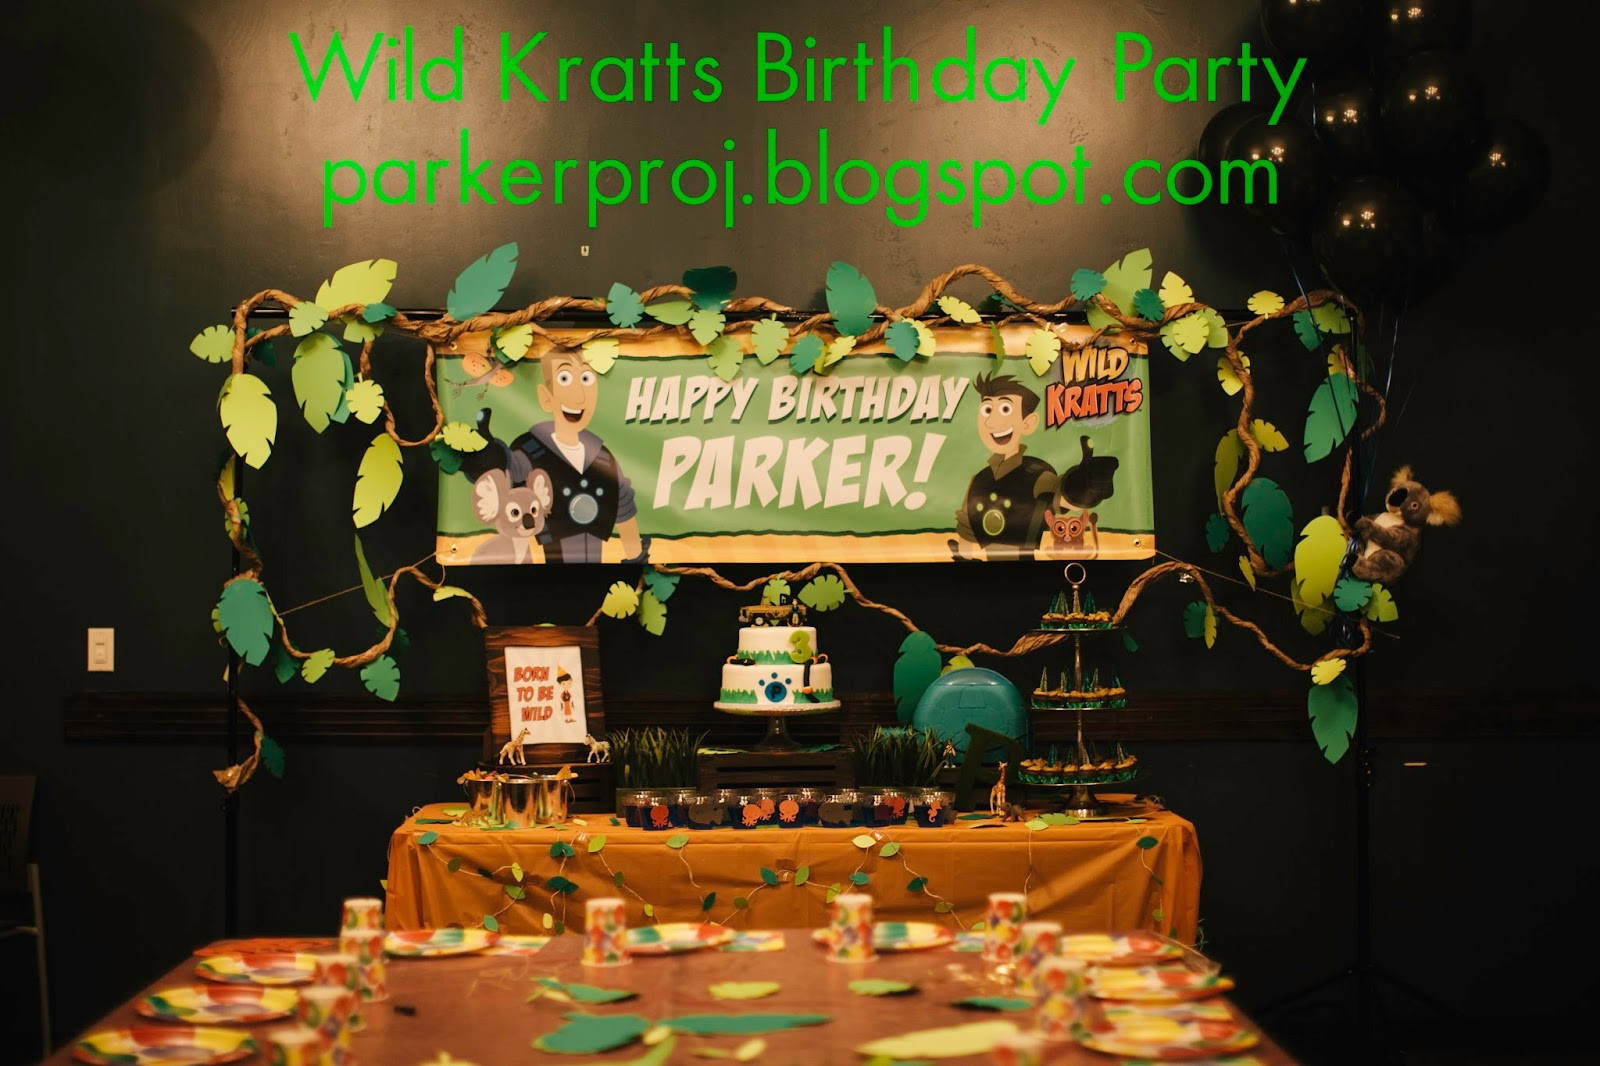 Wild Kratts Birthday Party Ideas
 The Parker Project Wild Kratts Birthday Party at Nickel